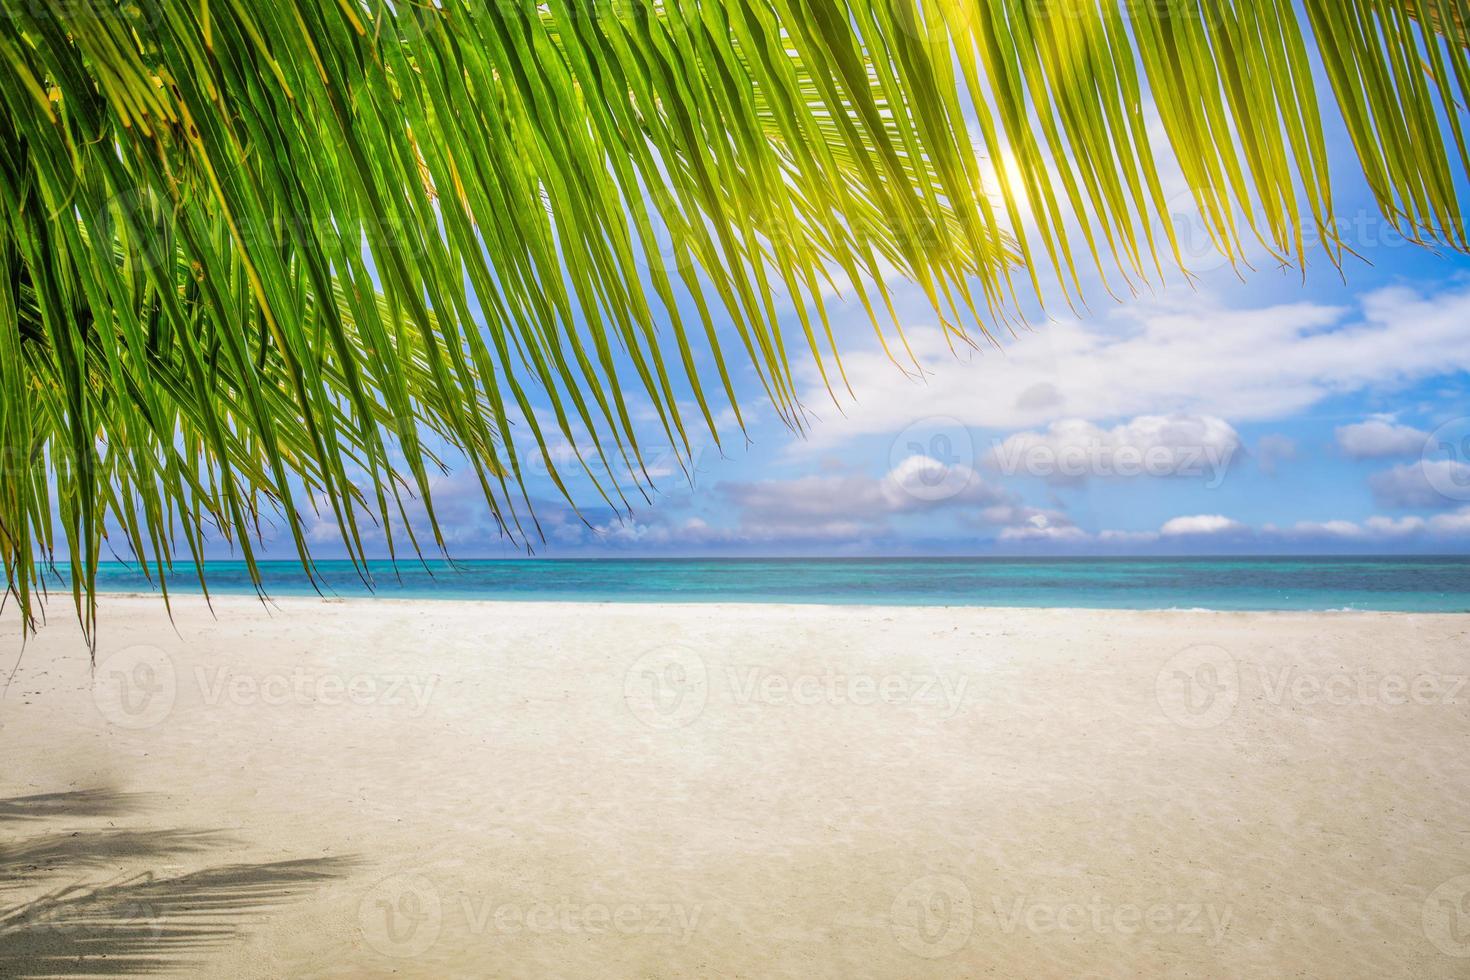 panoramisch landschap visie van wit strand zand zee water en blauw lucht Doorzichtig achtergrond. tropisch paradijs banier, detailopname palm bladeren. zomer reizen achtergrond, behang panorama. zonnig strand tafereel foto